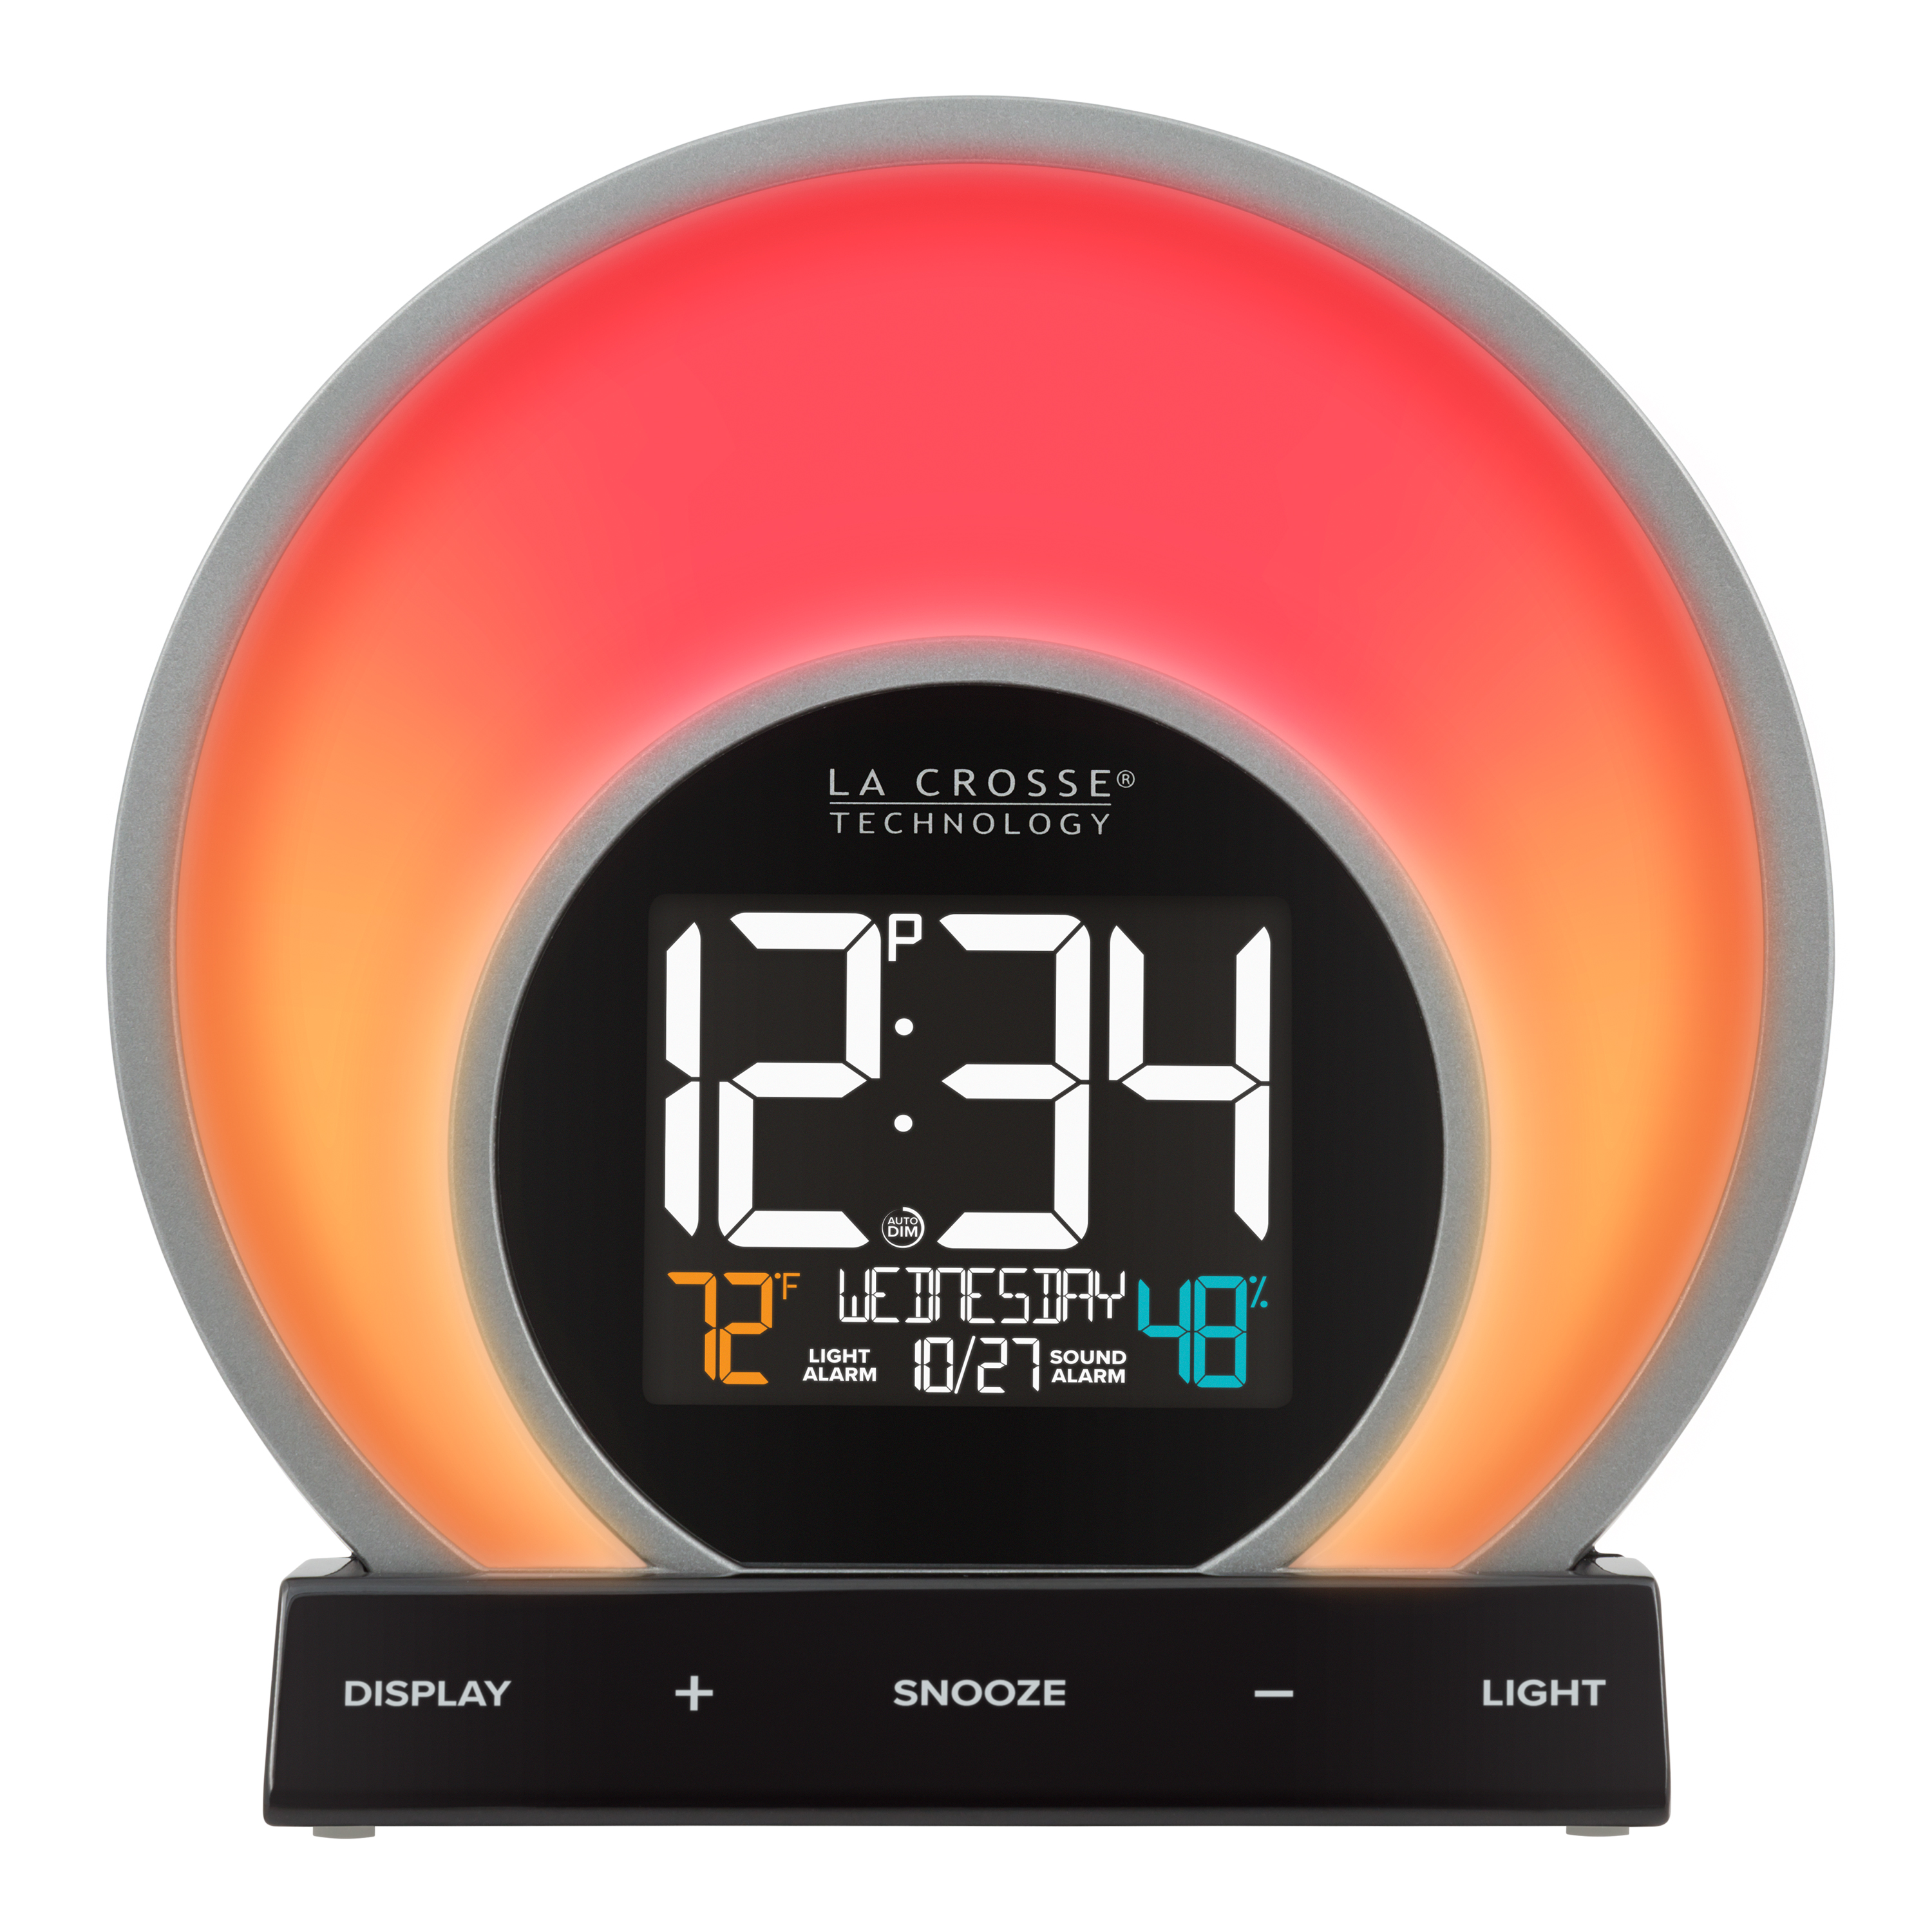 La Crosse Technology 6.81" x 2.69" Digital Soluna Sunrise & Sunset LCD Light Alarm Clock with USB port, C80994 - image 3 of 8